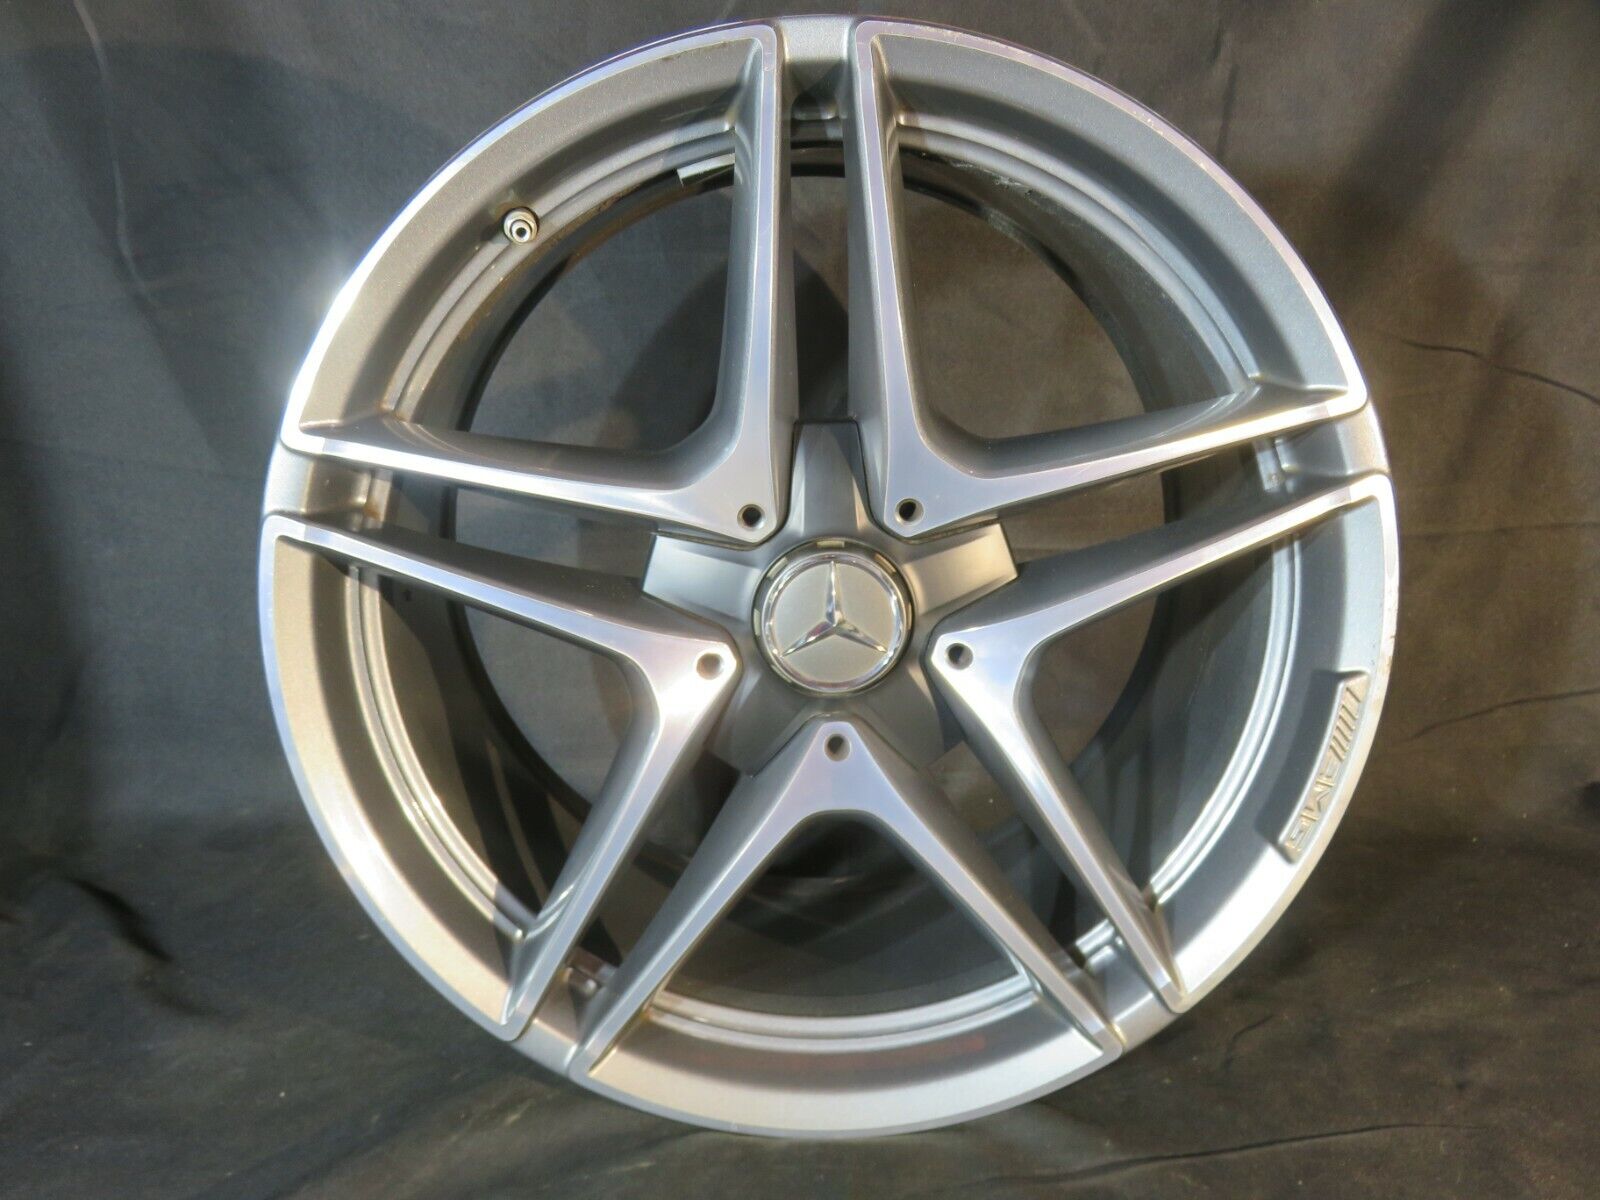  Mercedes C63 AMG s Wheel Rim 19X9-1/2   10  Spoke 2015 A2054012000 Aluminum  